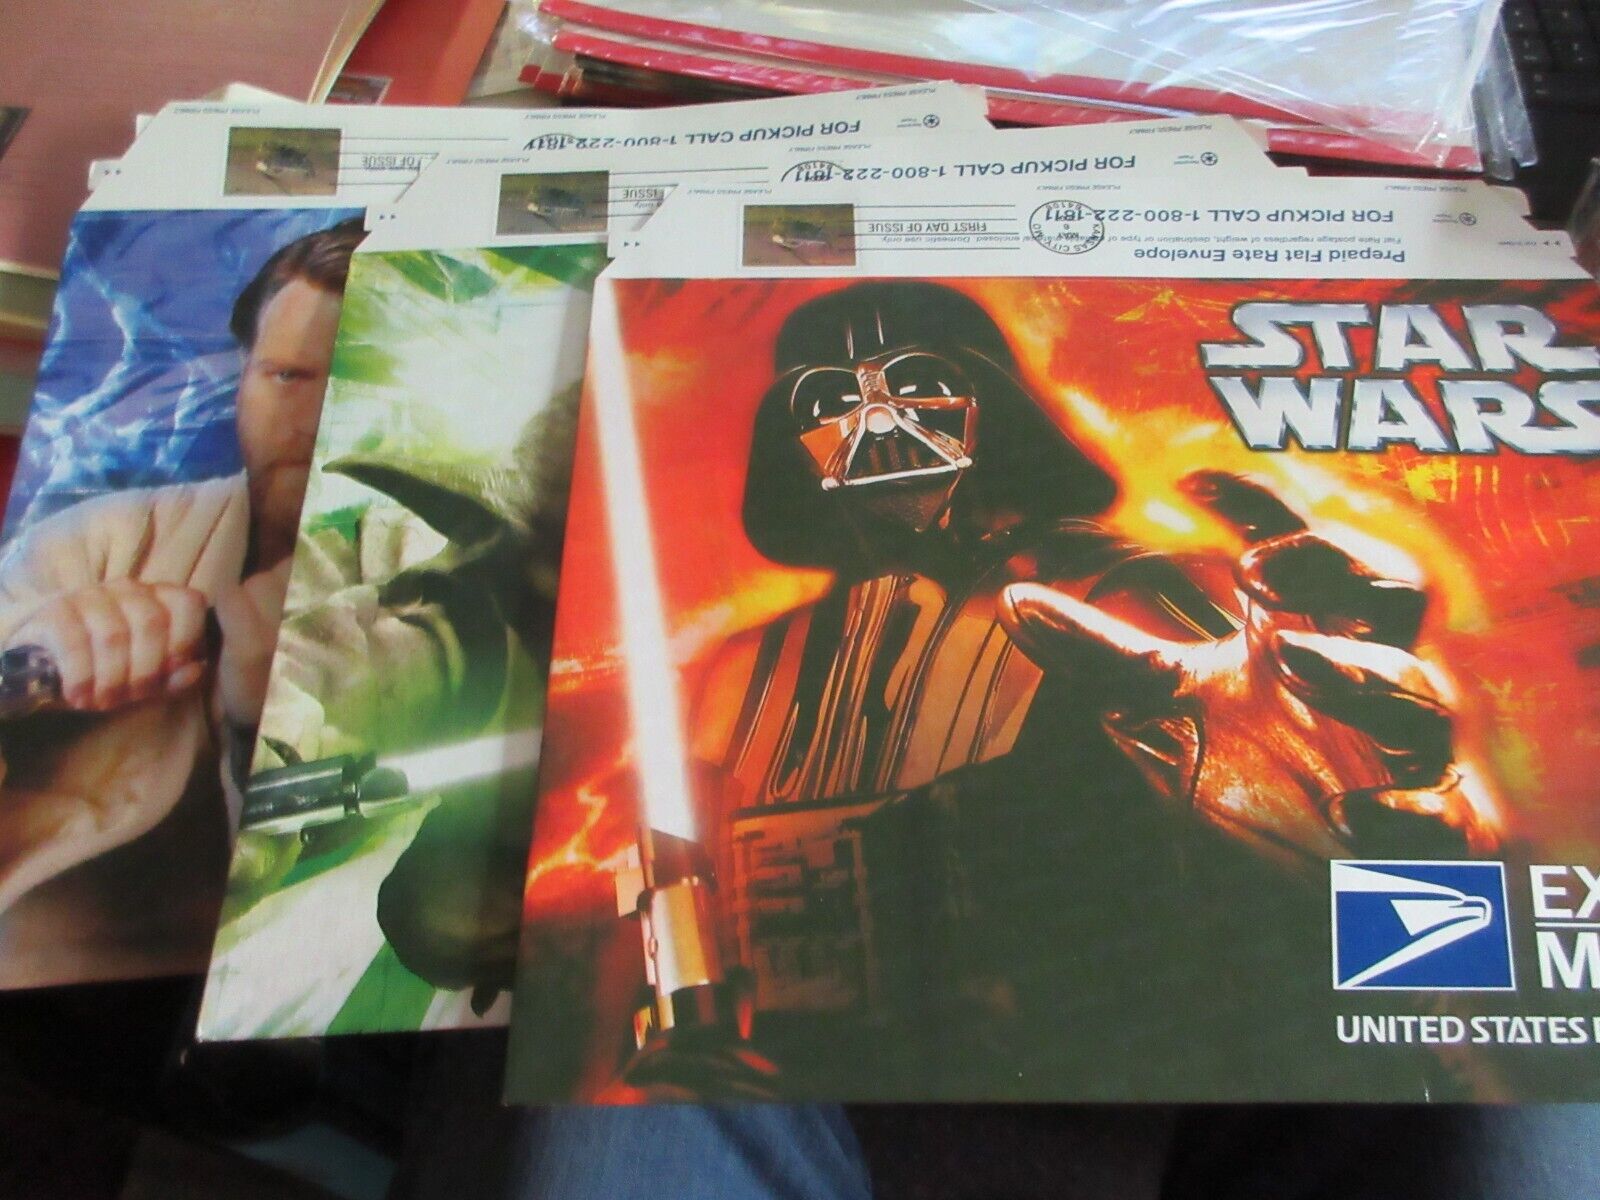 USPS Priority Mail Express Star Wars Envelope, Set of 3